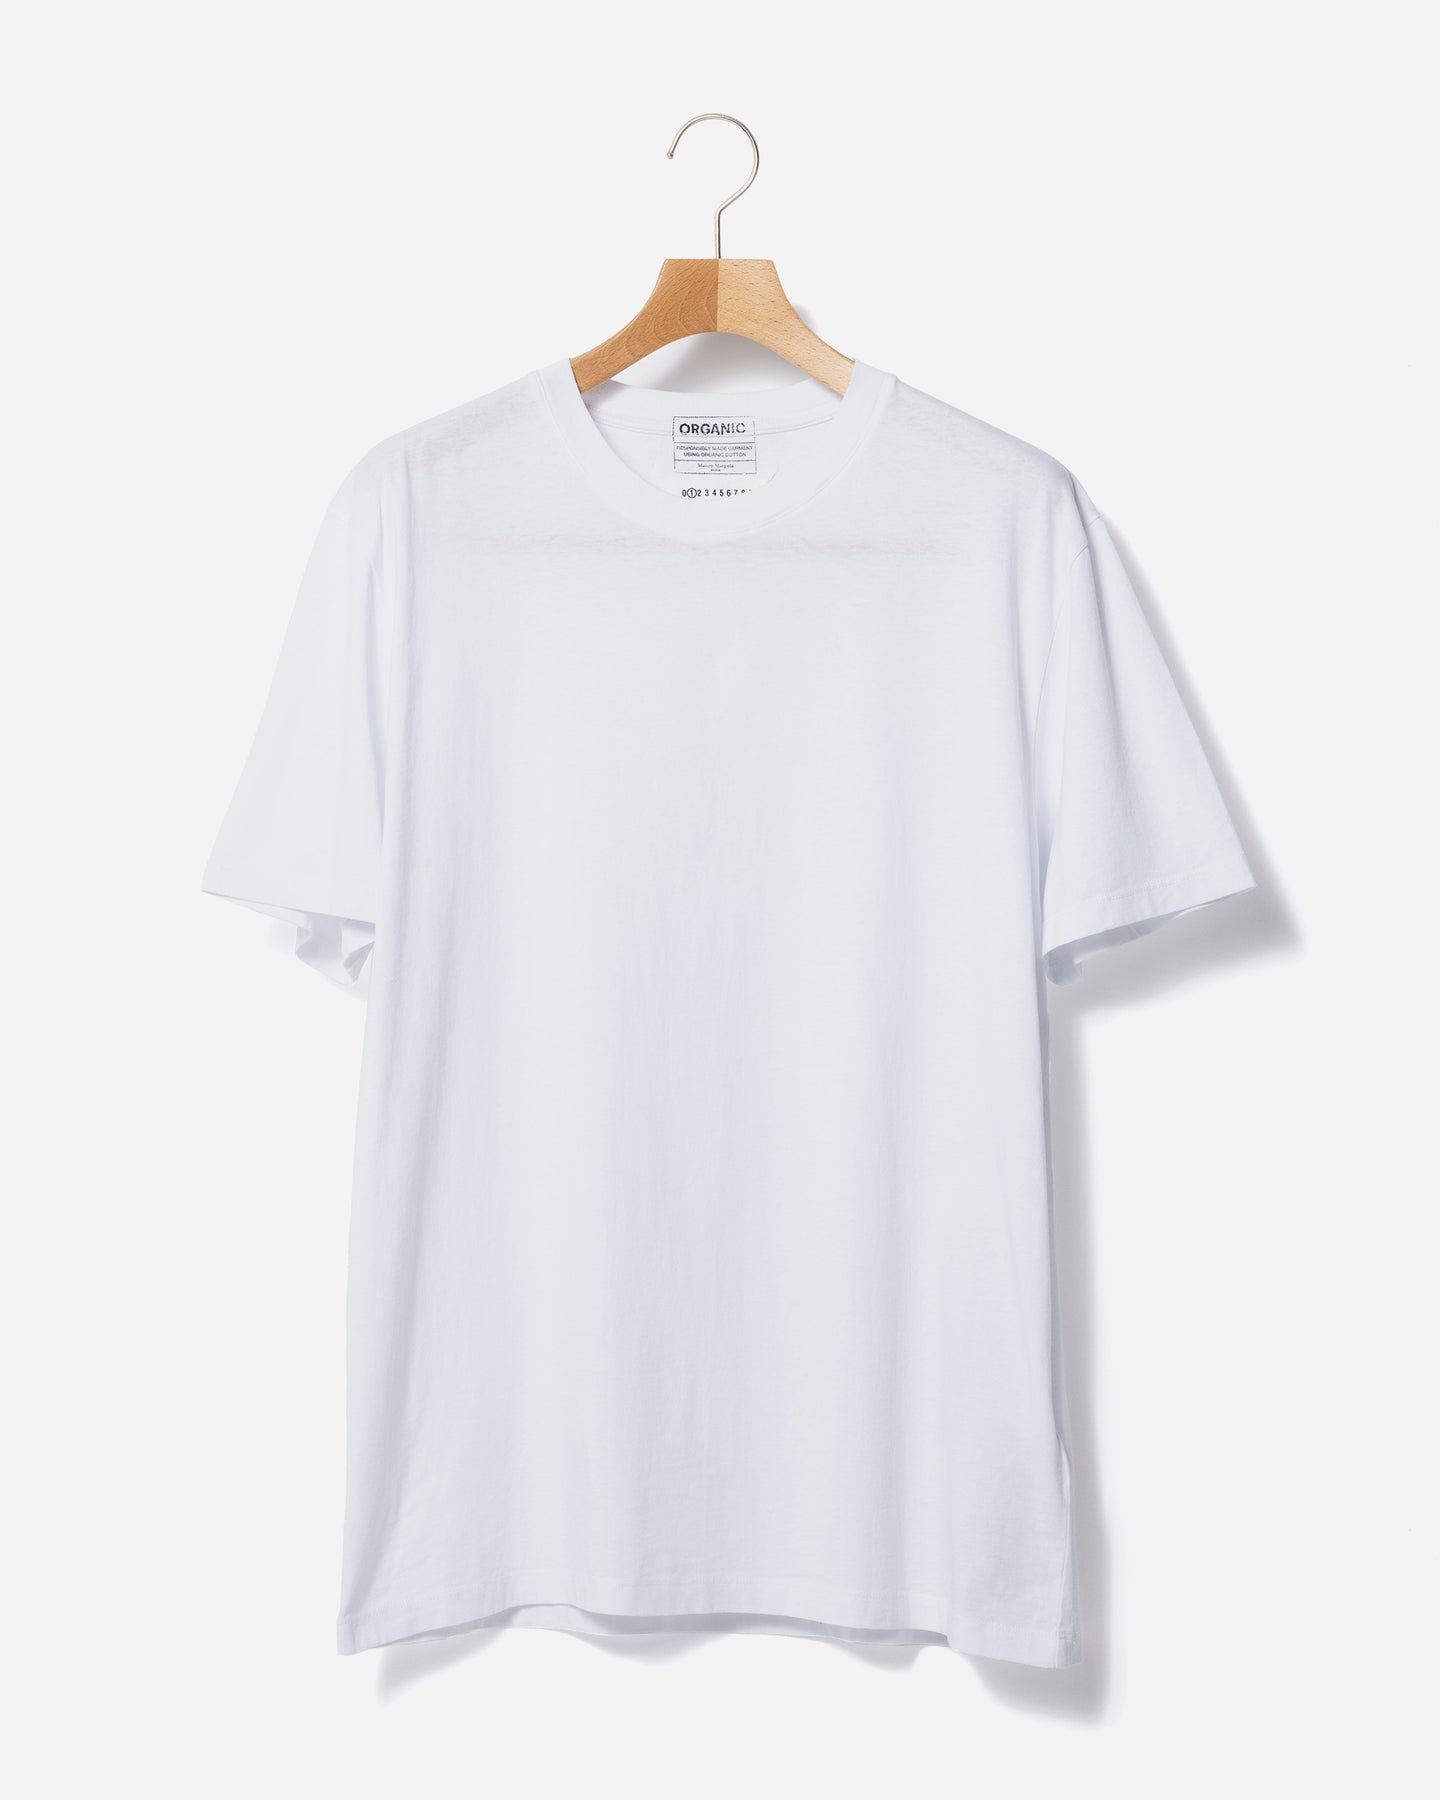 MAISON MARGIELA メゾン マルジェラ パックTシャツ 3枚セット S50GC0673 S23973 963 イタリア正規品 新品 ホワイト系